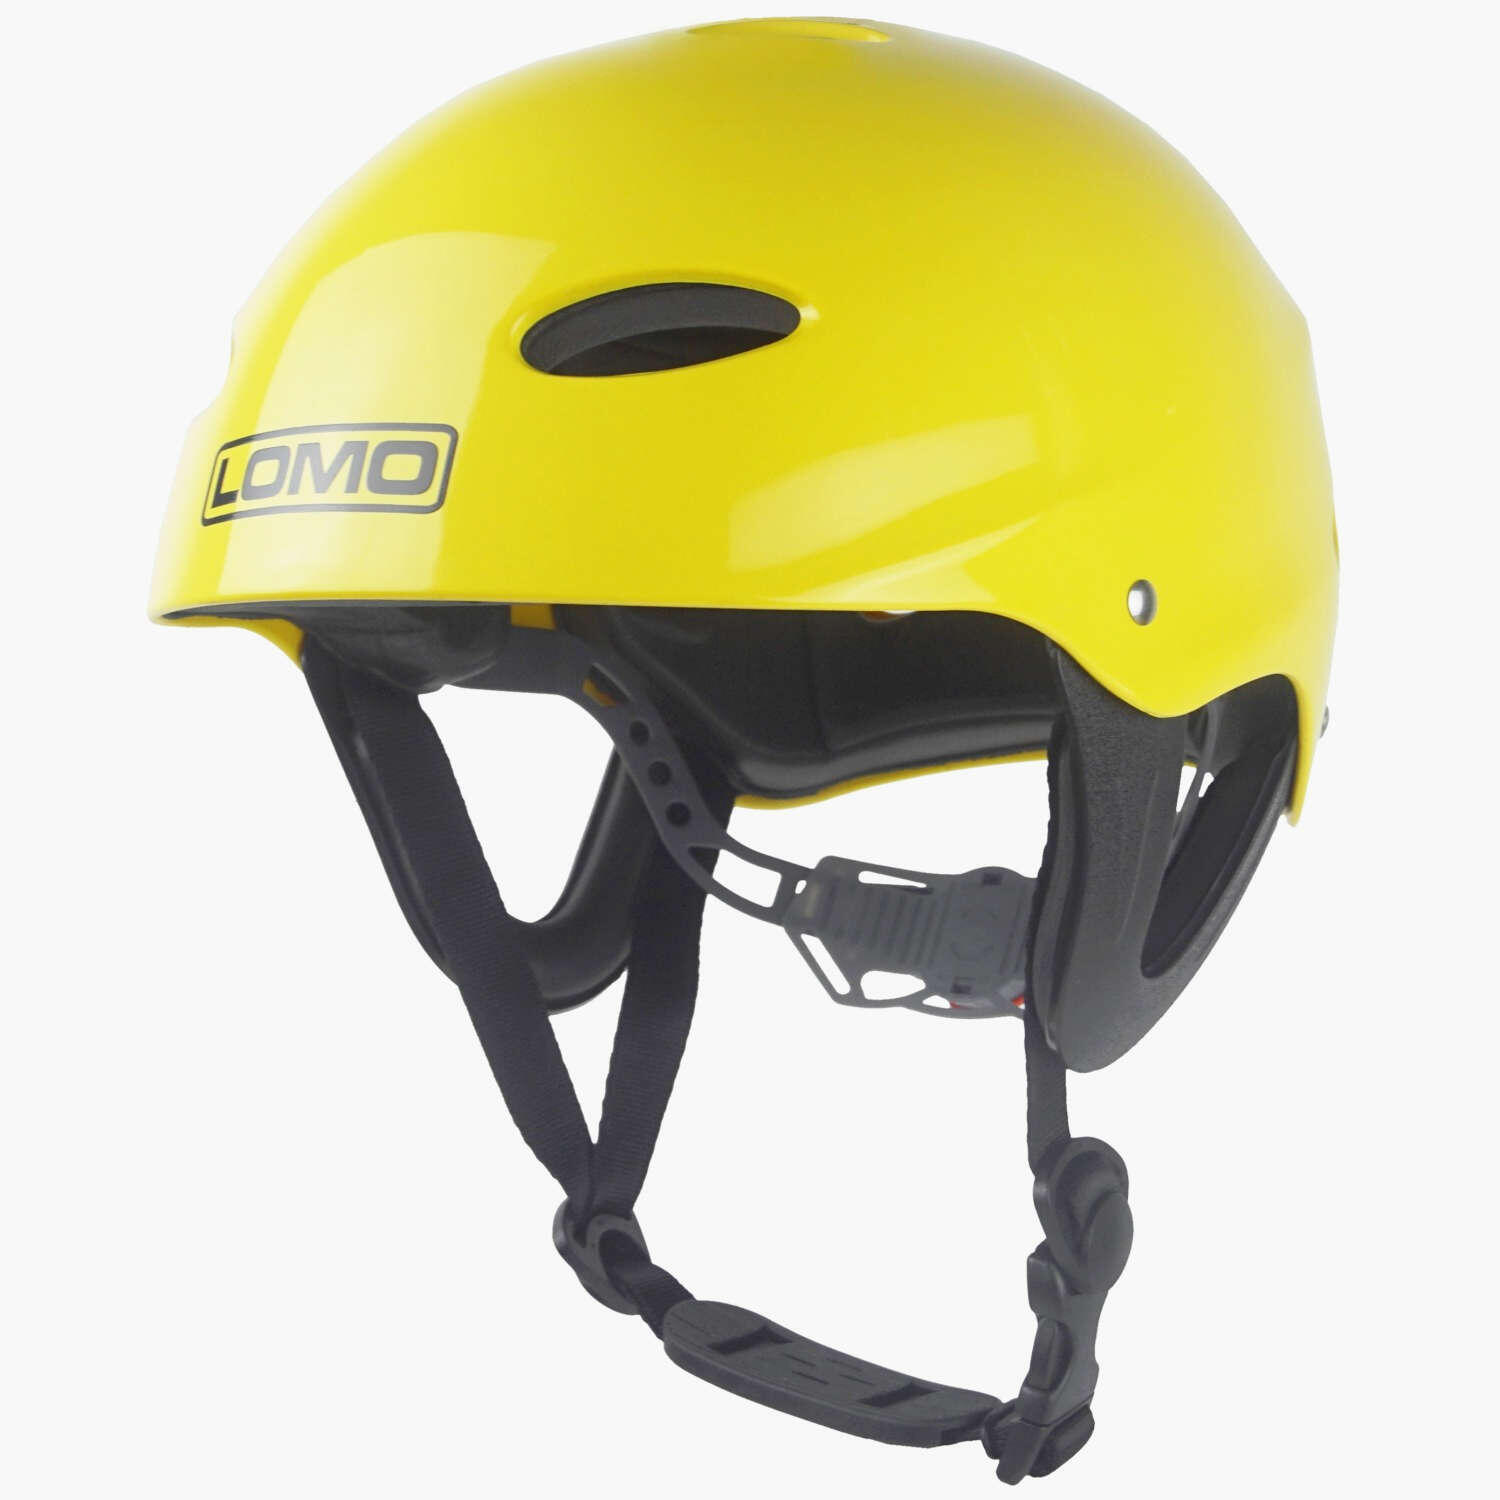 Lomo Kayak Helmet - Yellow 3/4